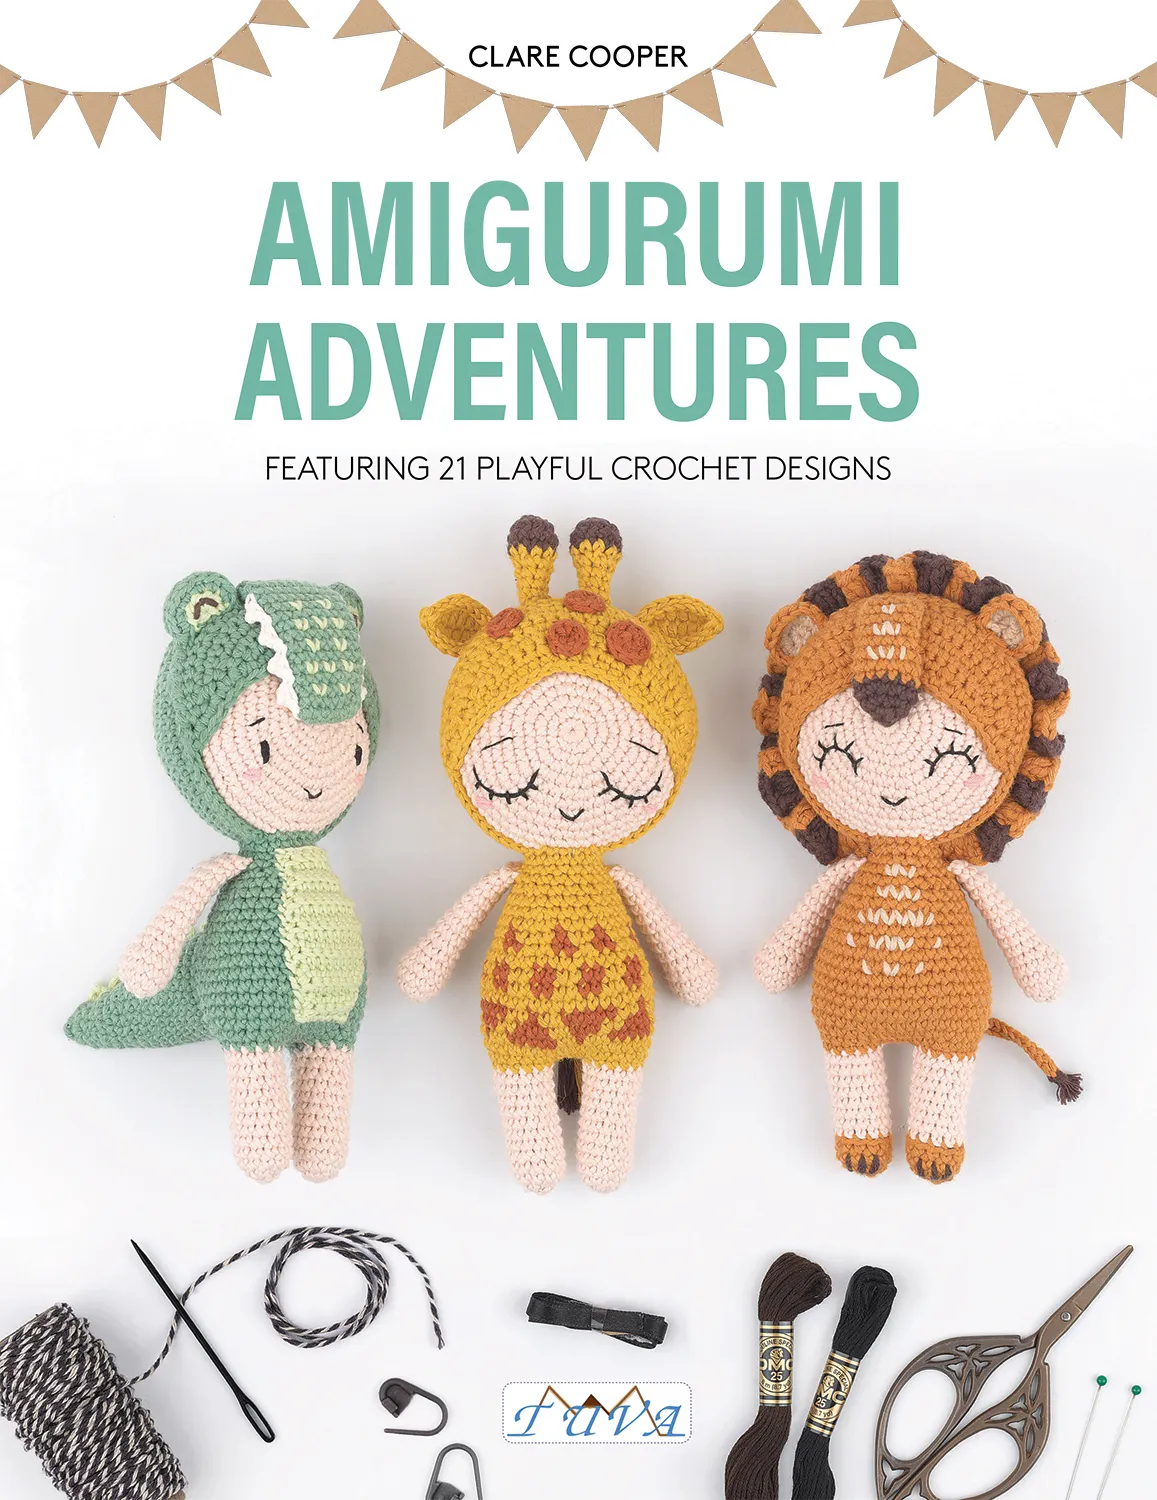 Win one of three copies of Clare Cooper's book, Amigurumi Adventures, featuring 21 playful crochet designs